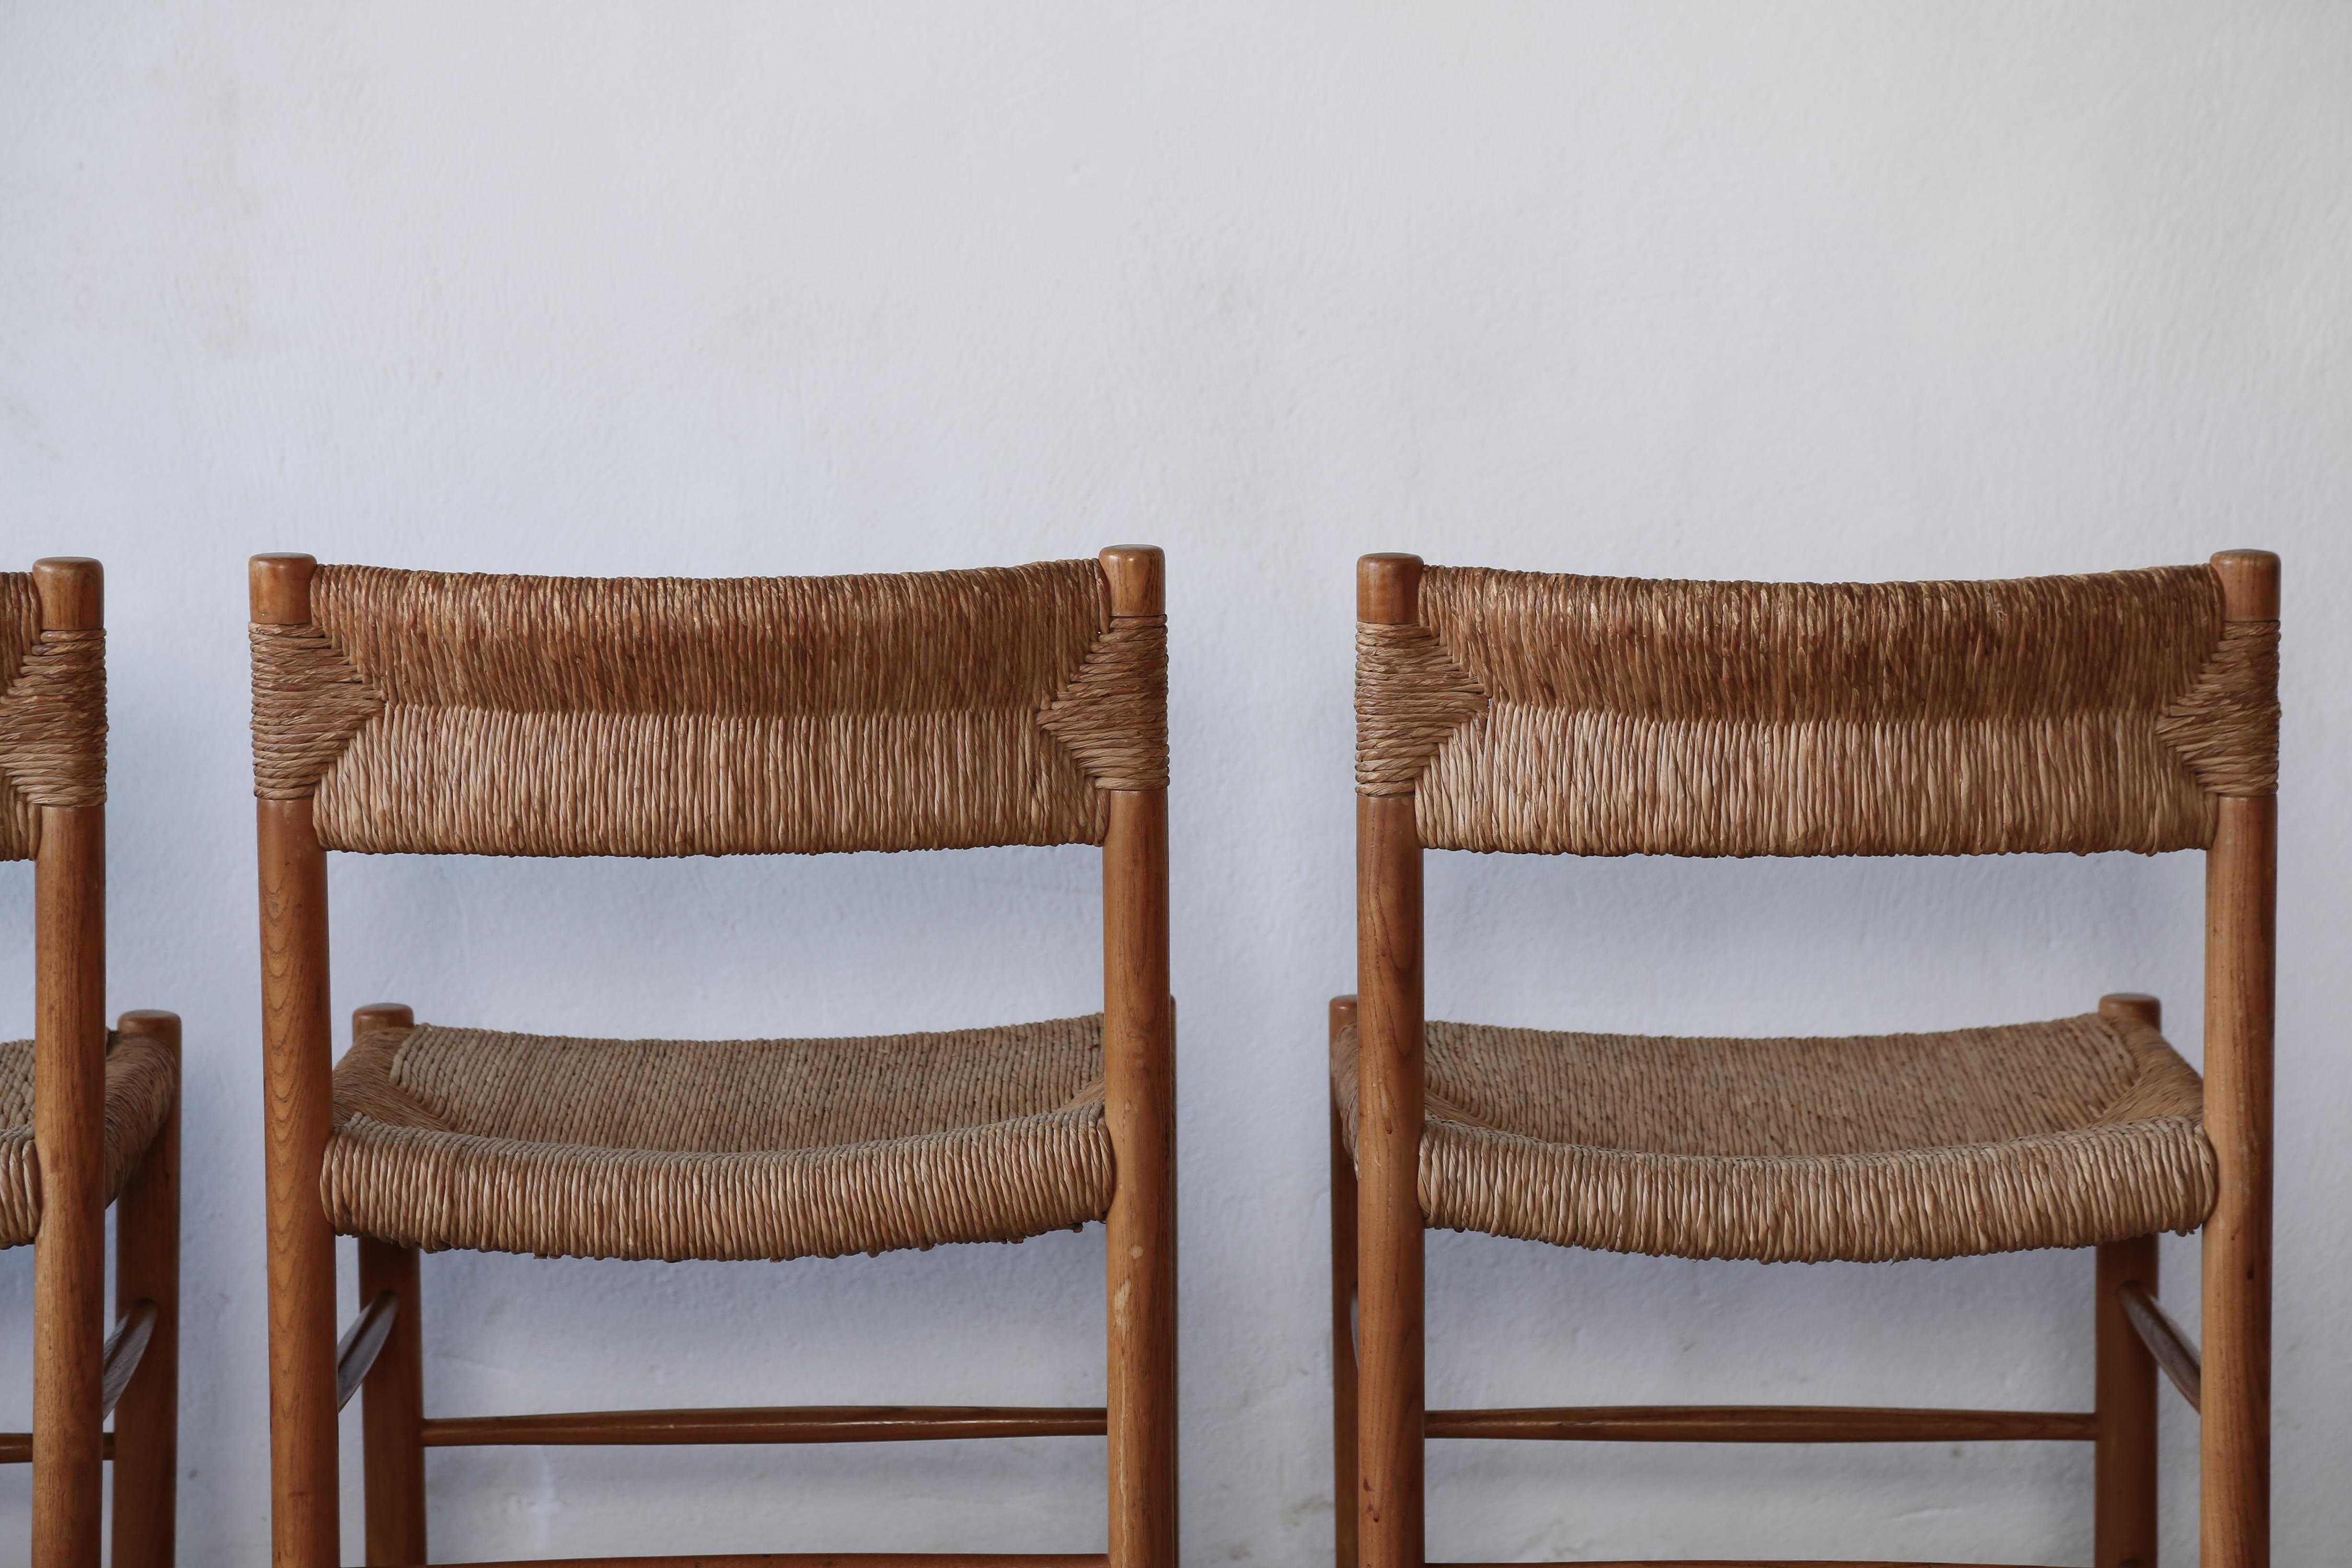 Rush Original Charlotte Perriand / Robert Sentou Dordogne Chairs, France, 1960s For Sale